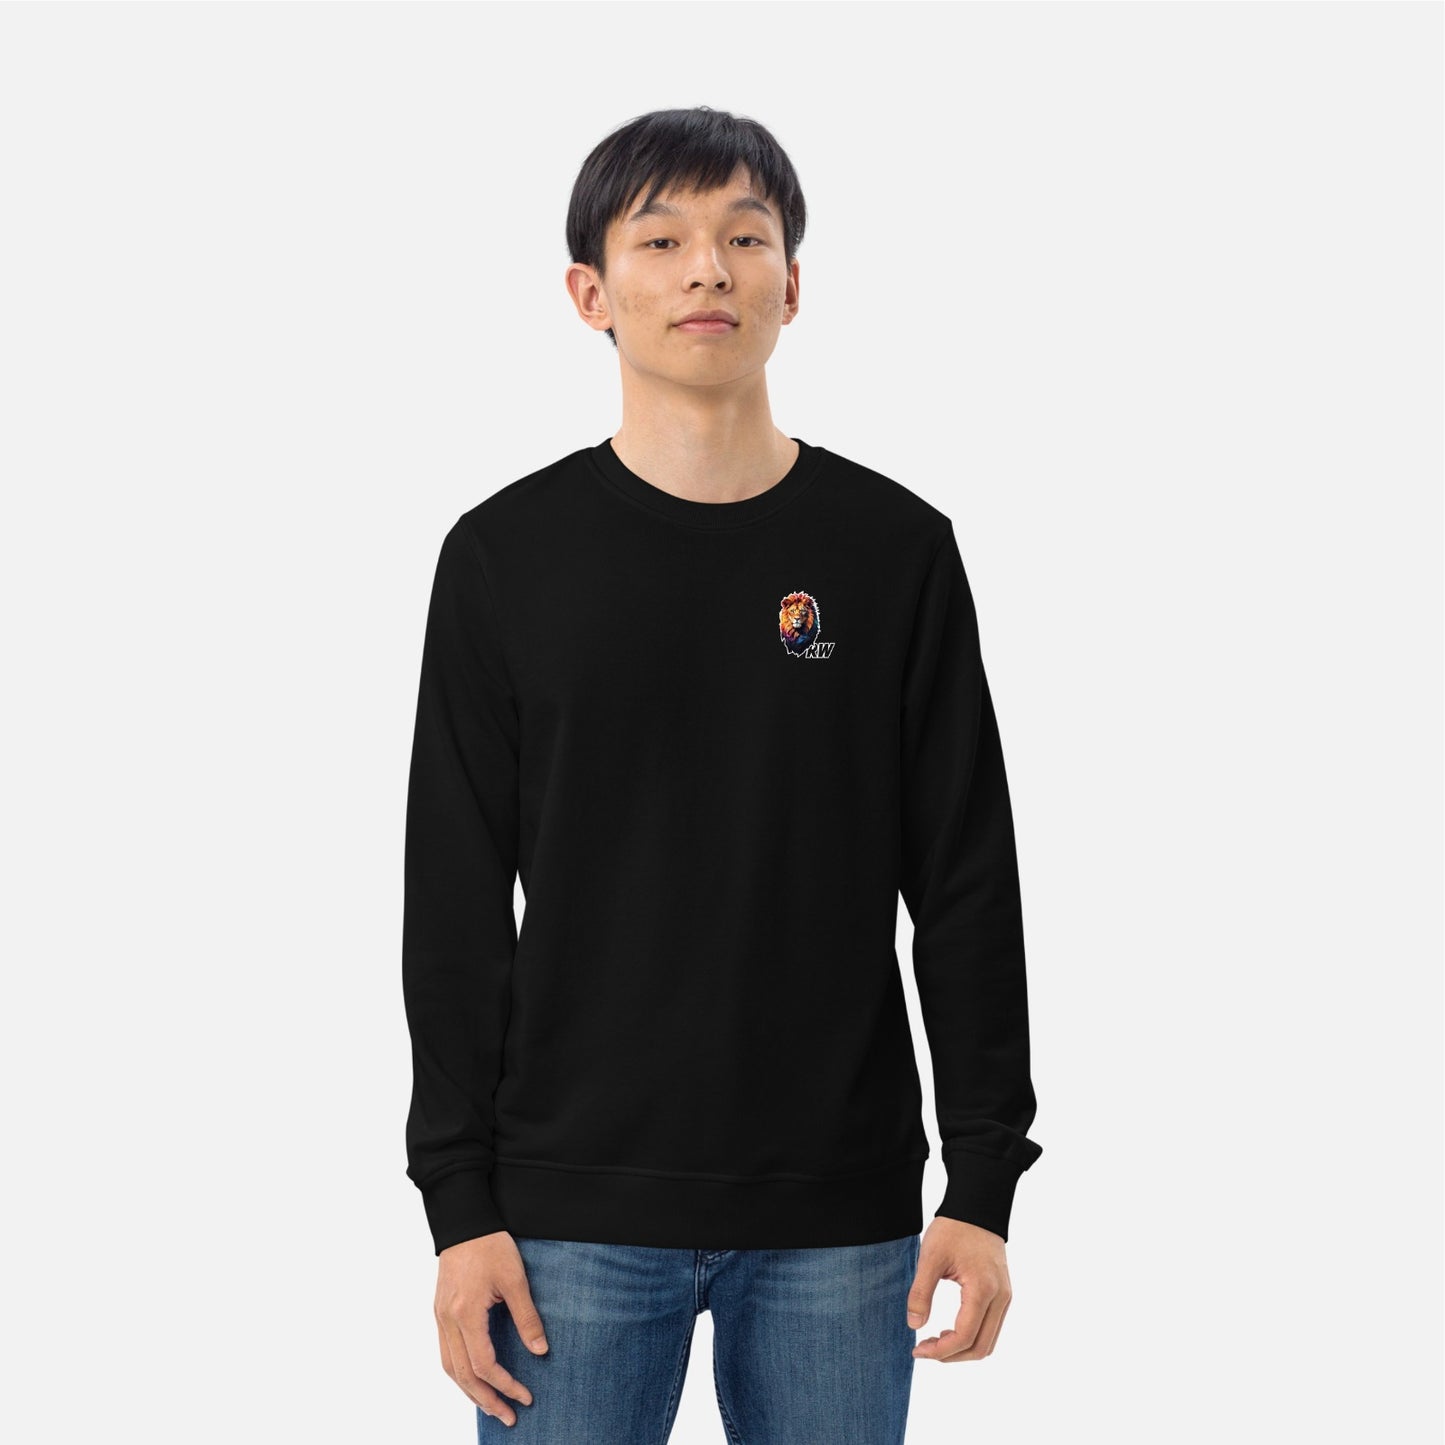 Sweatshirt Pullover Apparel Men Black RW Lion RWM9014